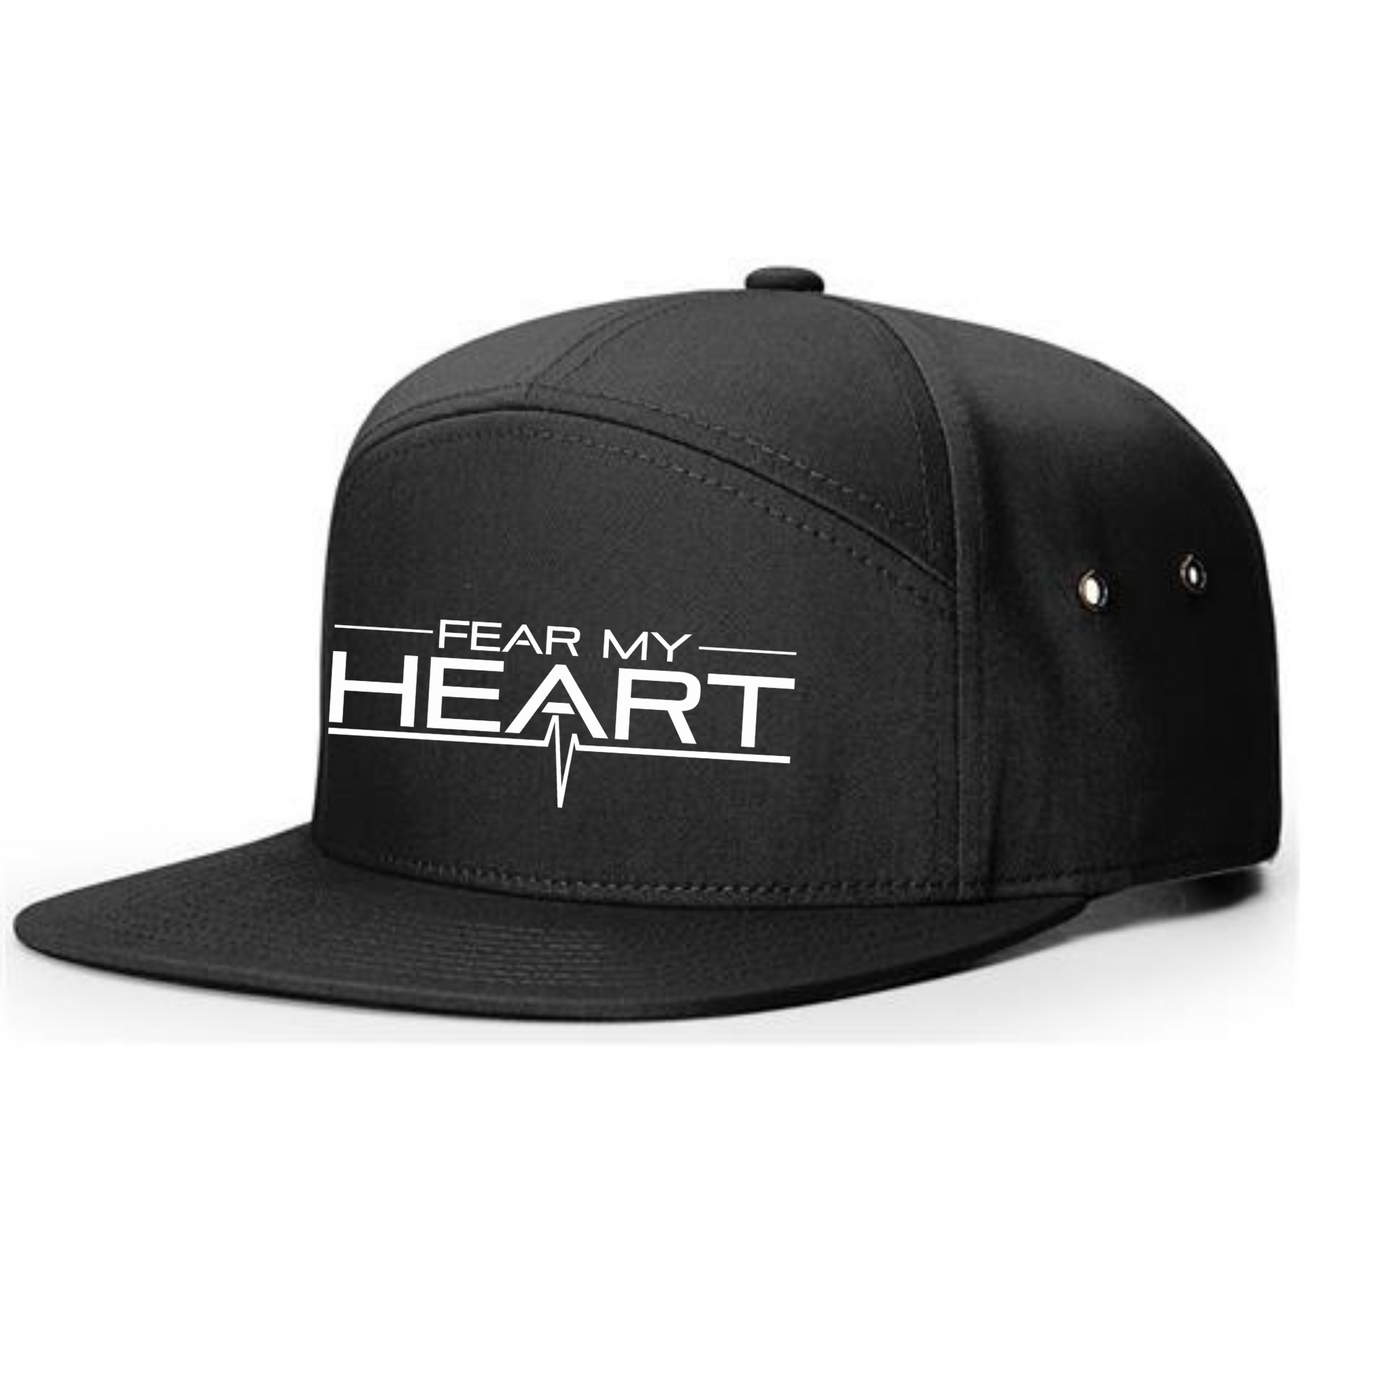 Fear My Heart Hat - 7 Panel Twill Flat Bill